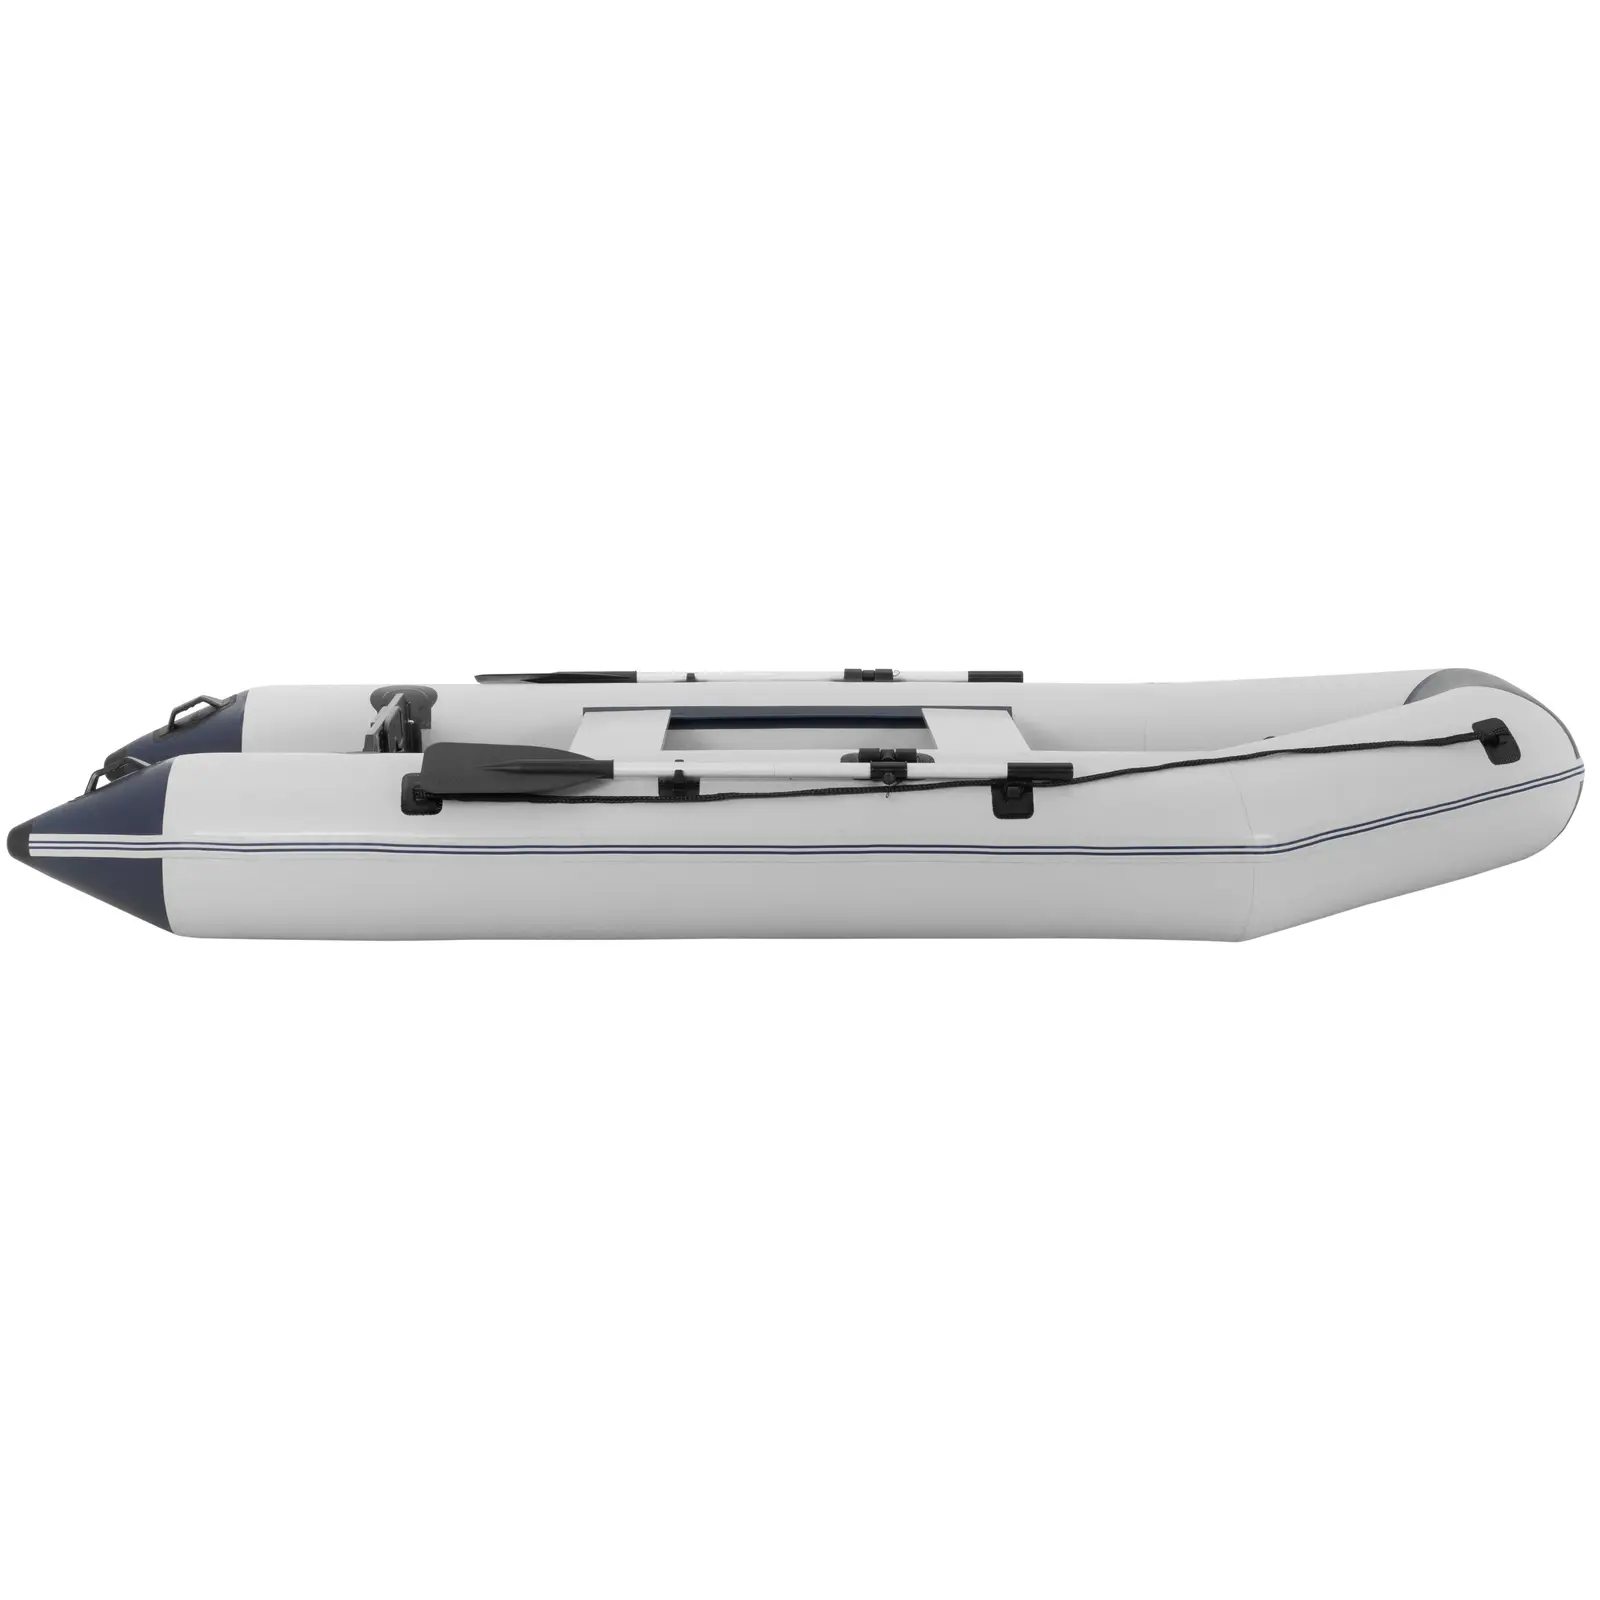 Barca neumática - negra/blanca - 403 kg - suelo de aluminio - 5 personas